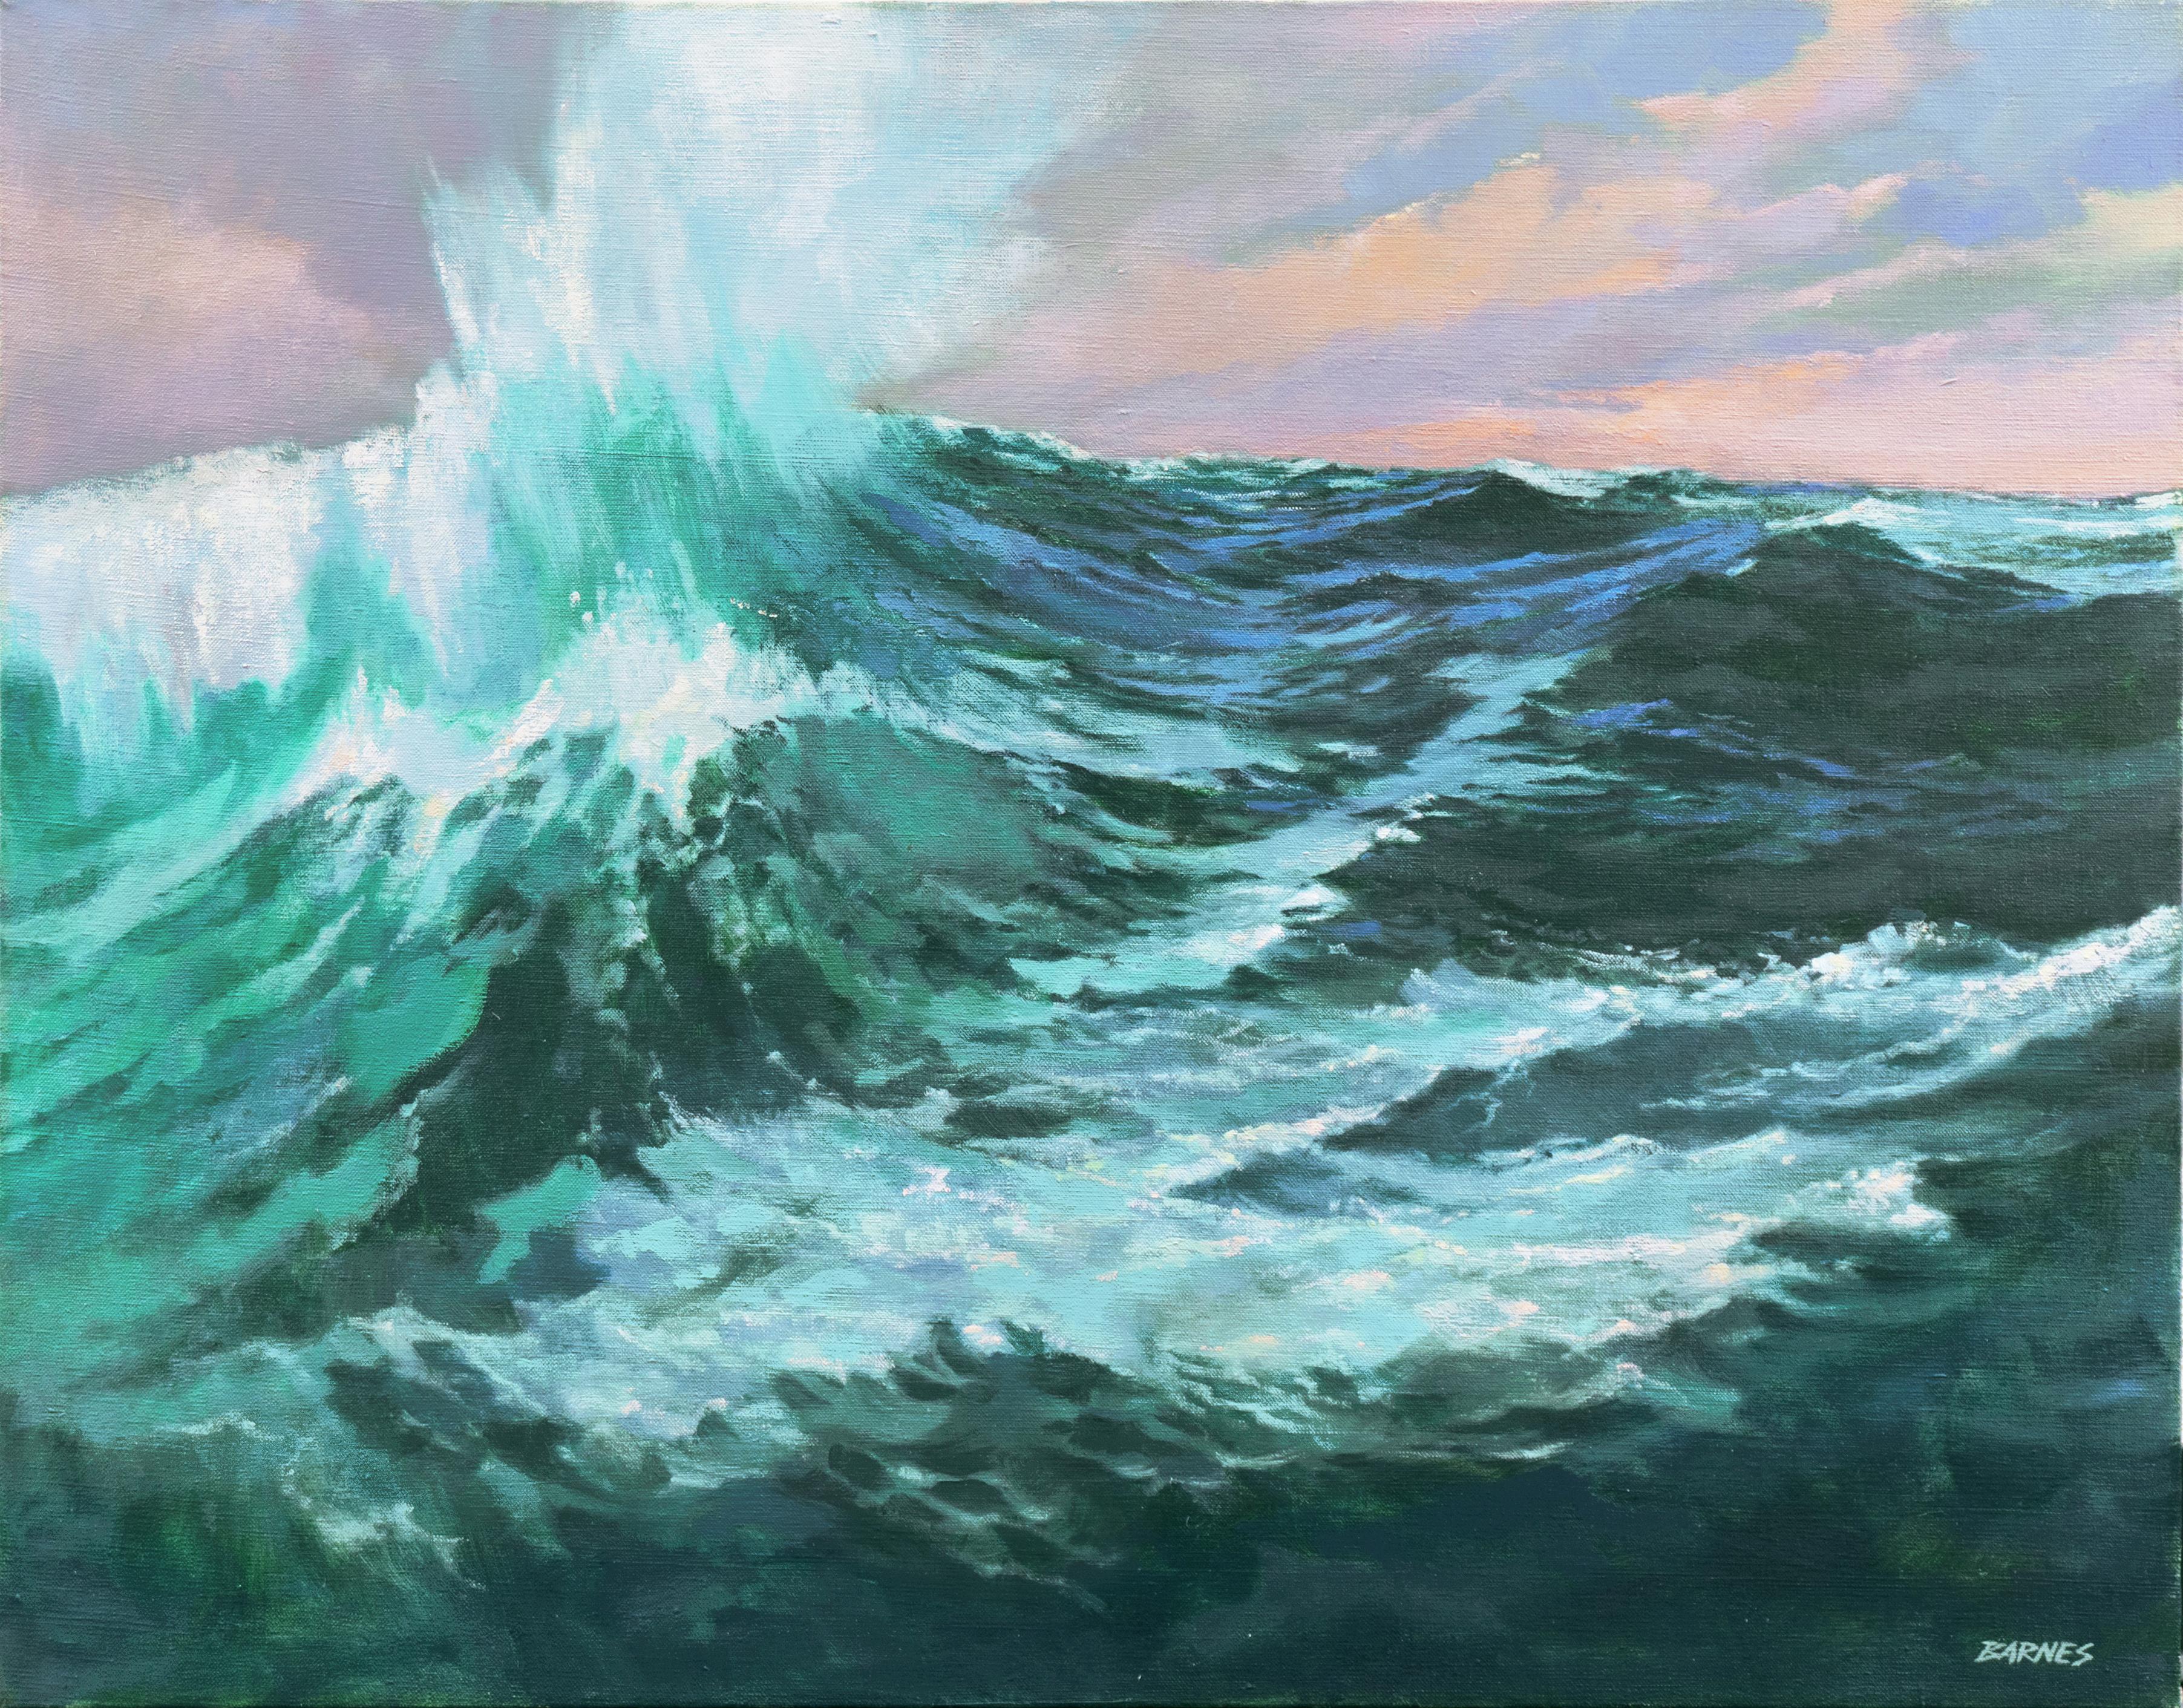 David P. Barnes Landscape Painting - 'Turbulent Sea, Evening Sky', Pacific Seascape, Mendocino, California, Large Oil